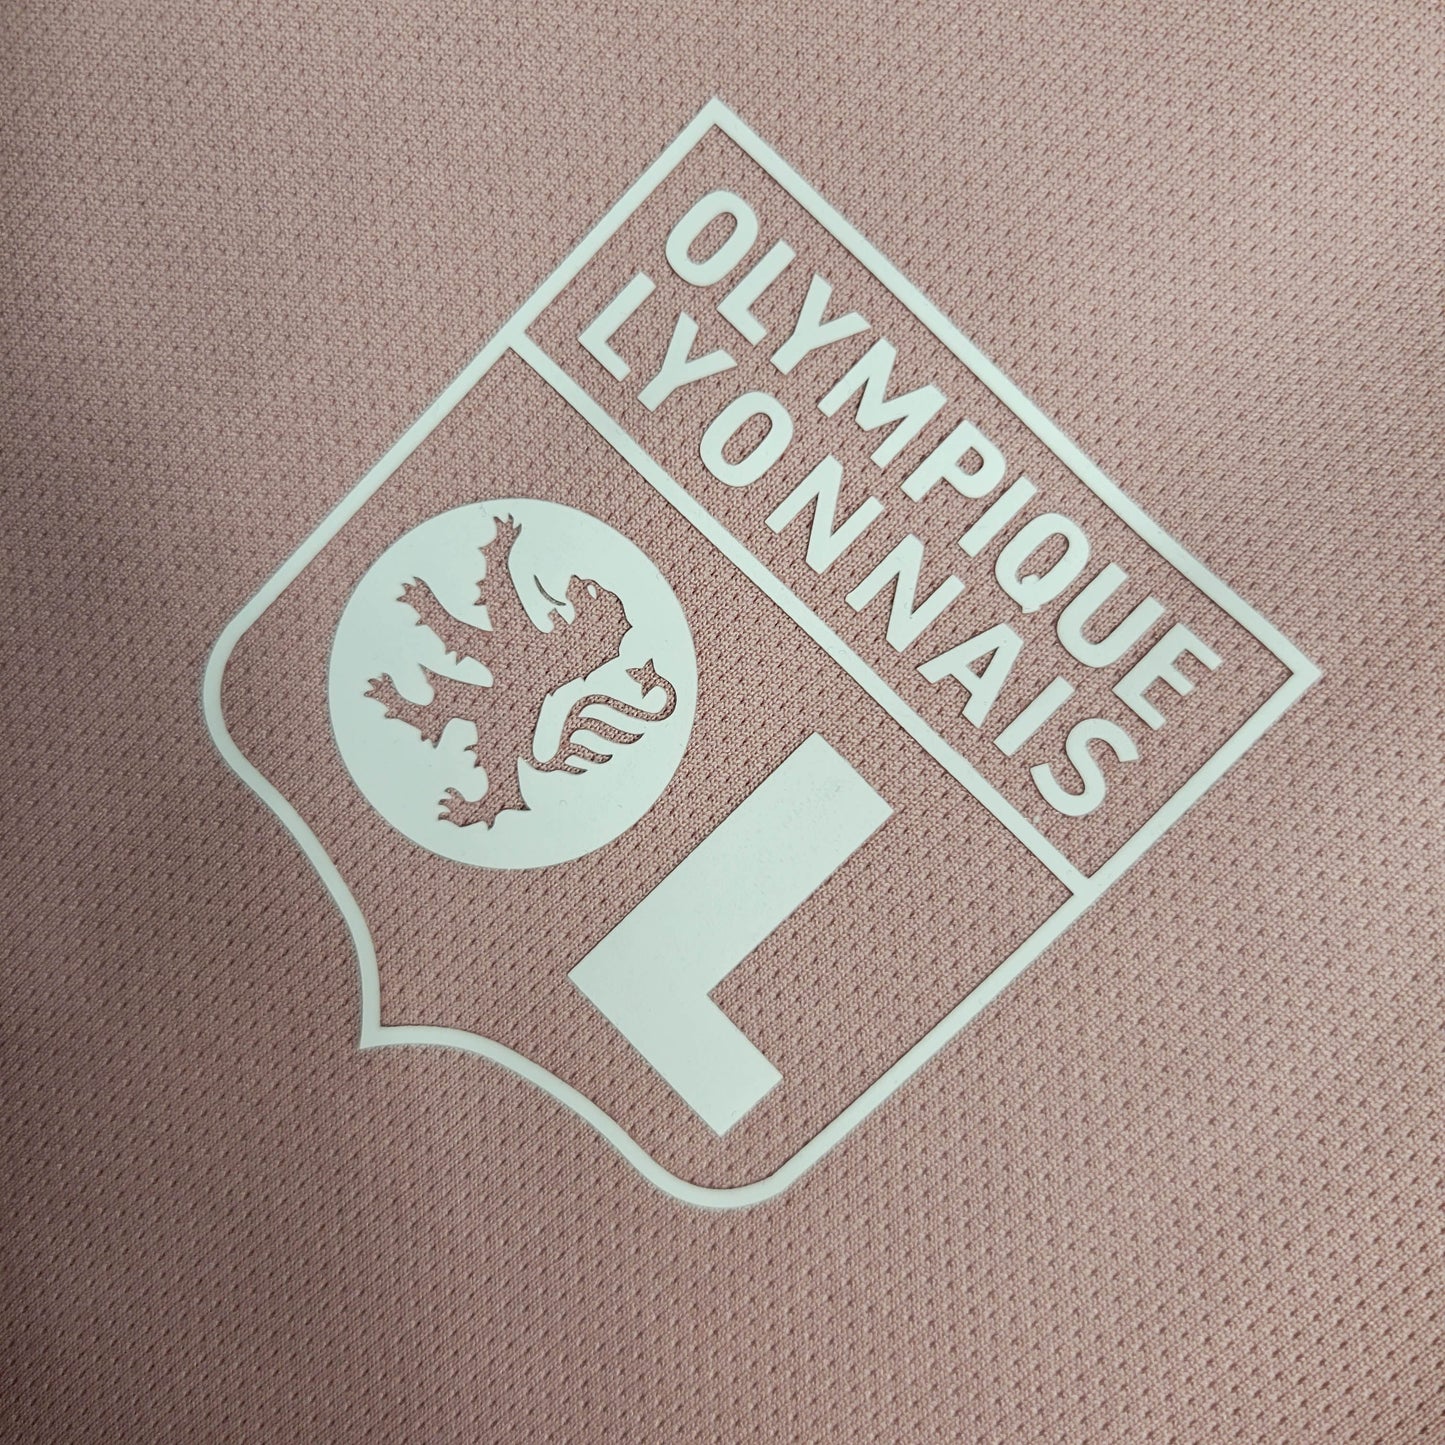 2023/2024 Lyon Training Wear Pink Football Shirt